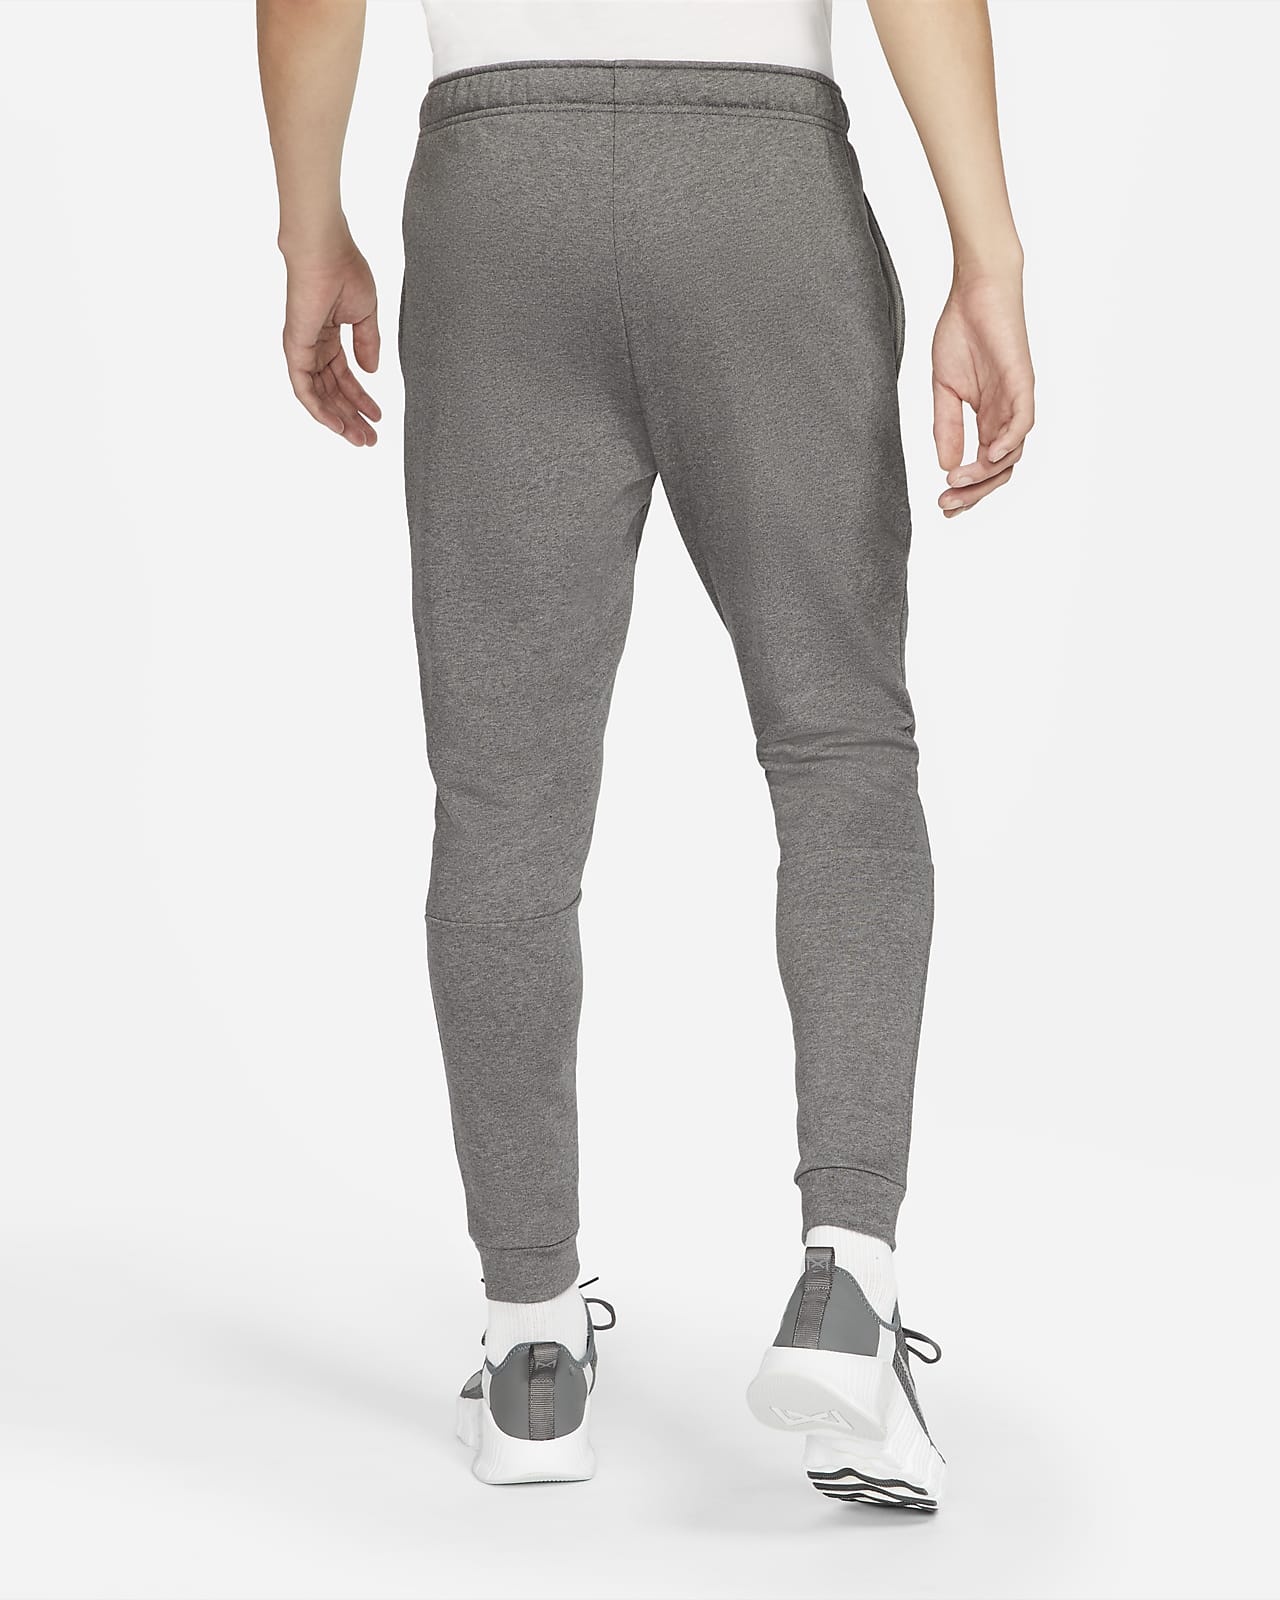 2018 Gym Training Jogging Pants Mens Joggers Slim Fit Soccer Sweatpants  Cotton Zipper Workout Running Tights Sport Trousers Men